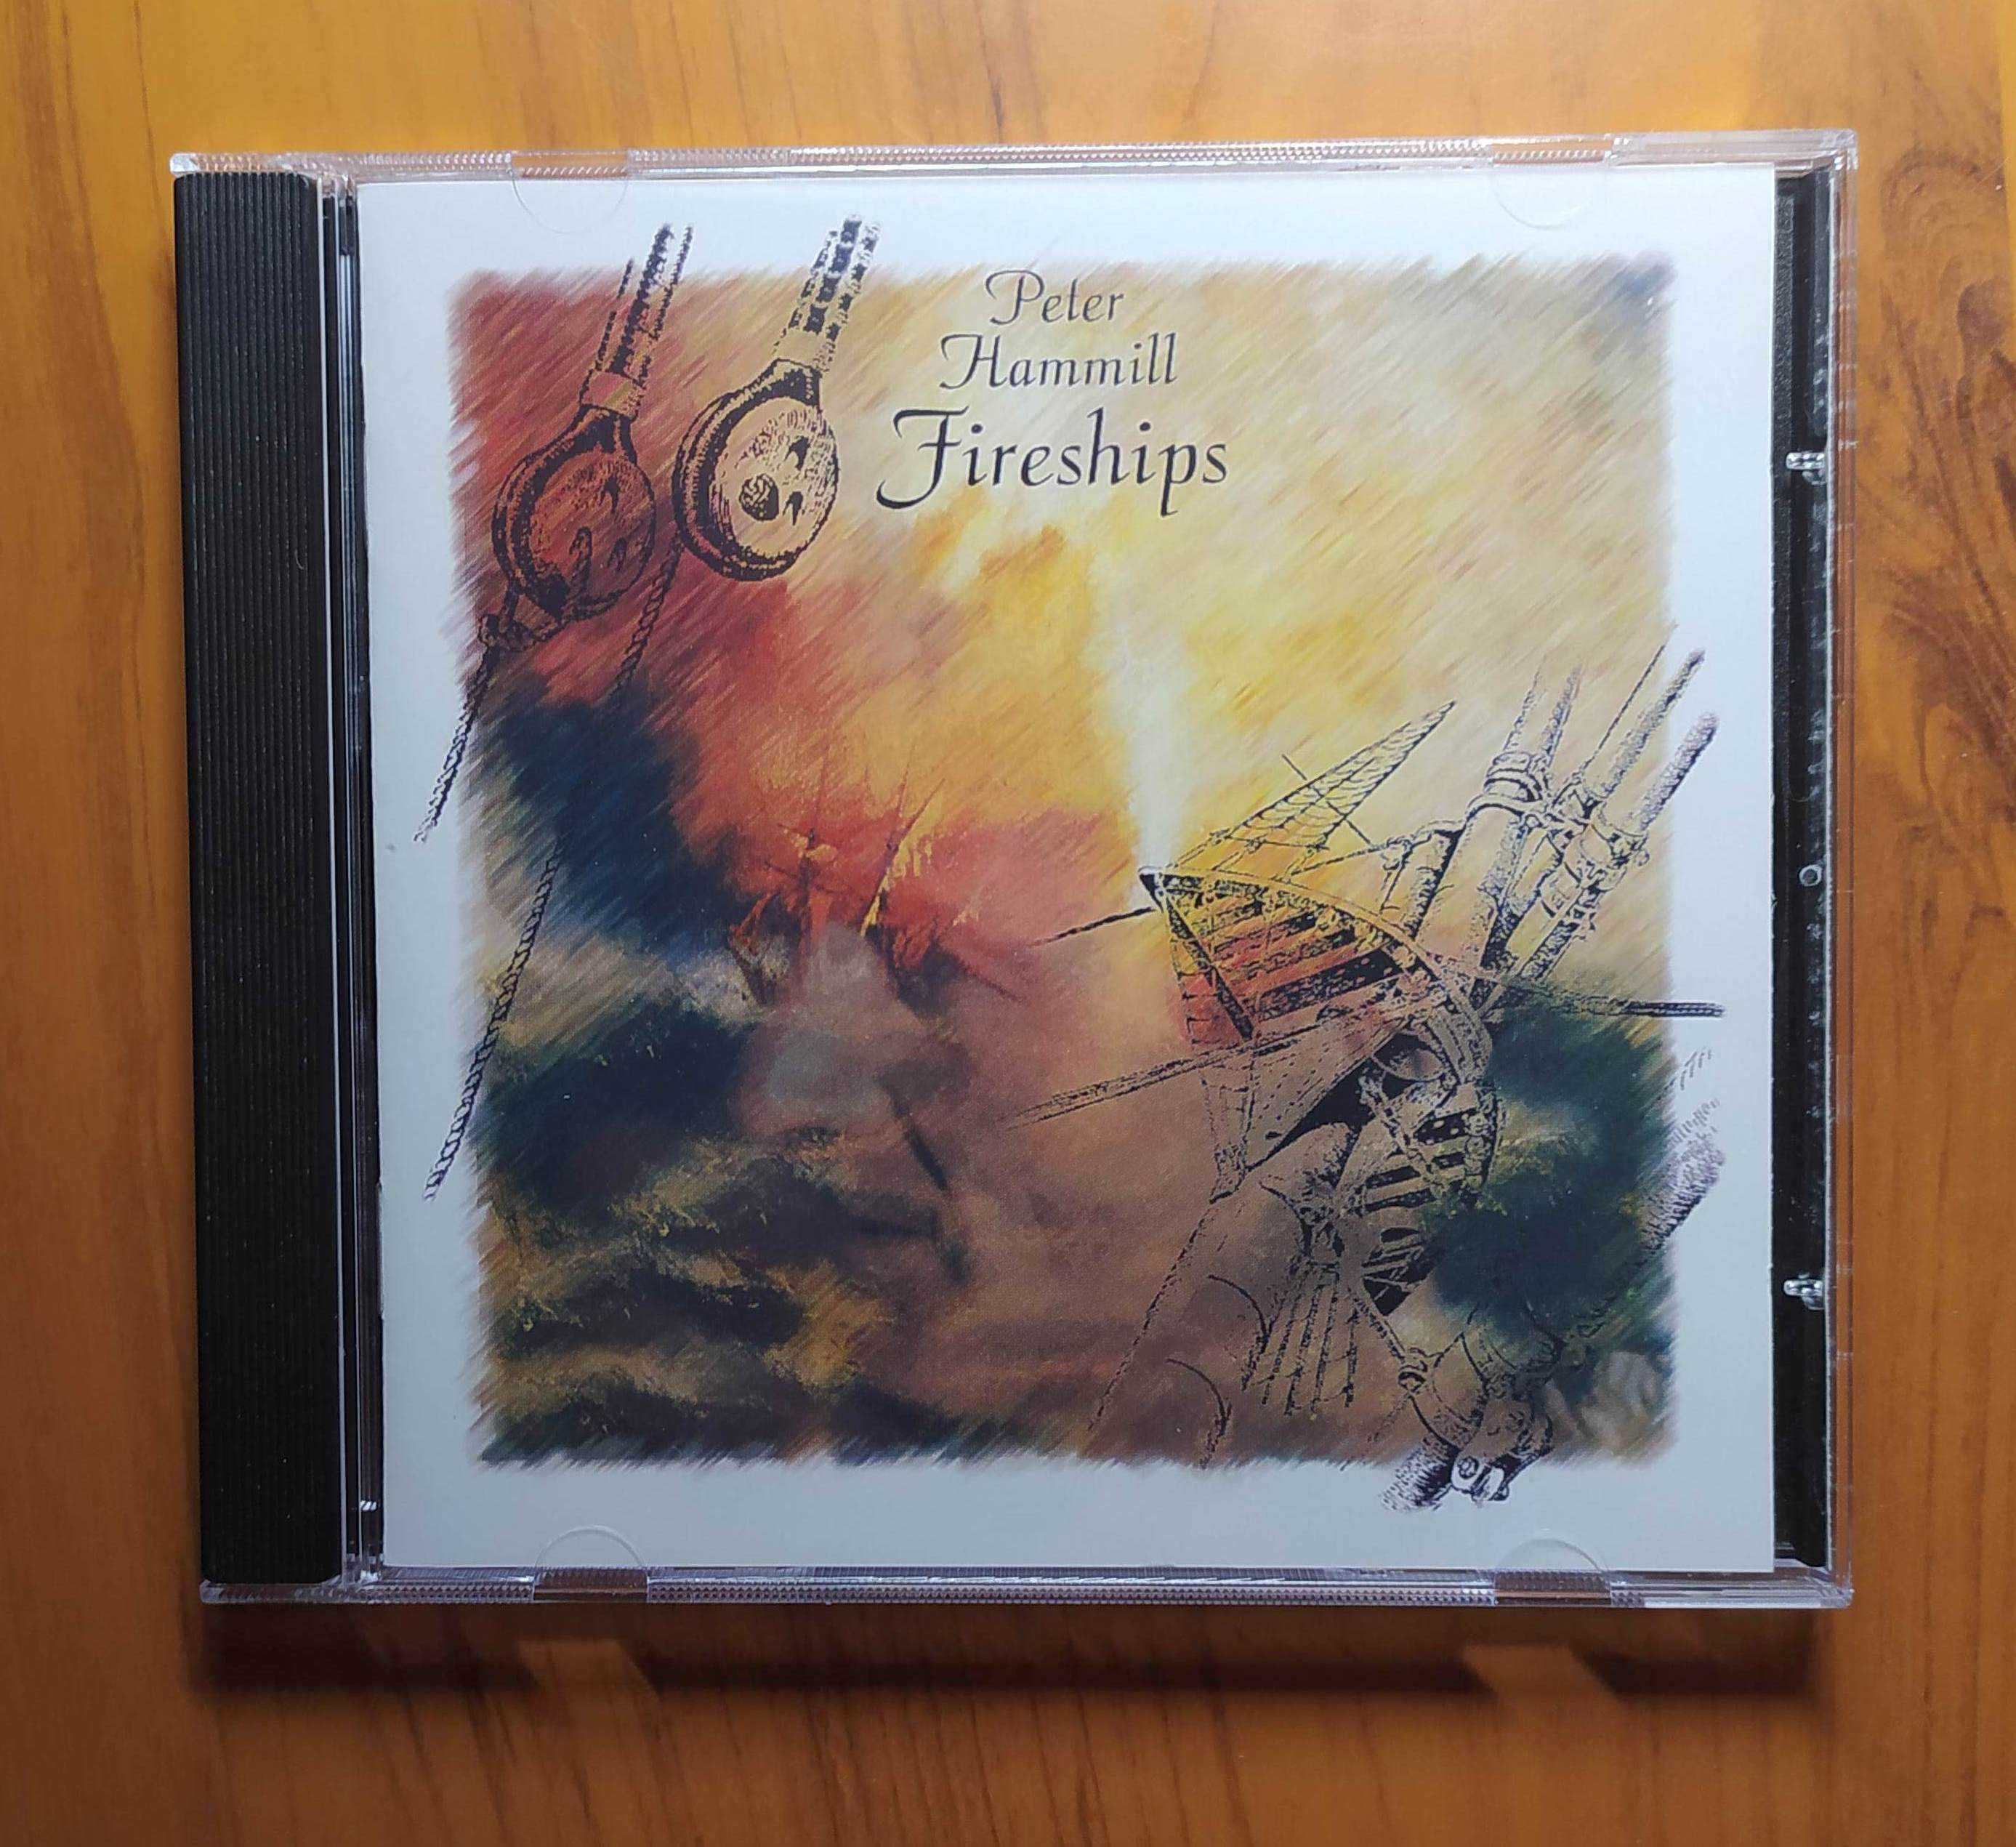 Фирменный CD Peter Hammill – "Fireships" 1992. Made in UK/